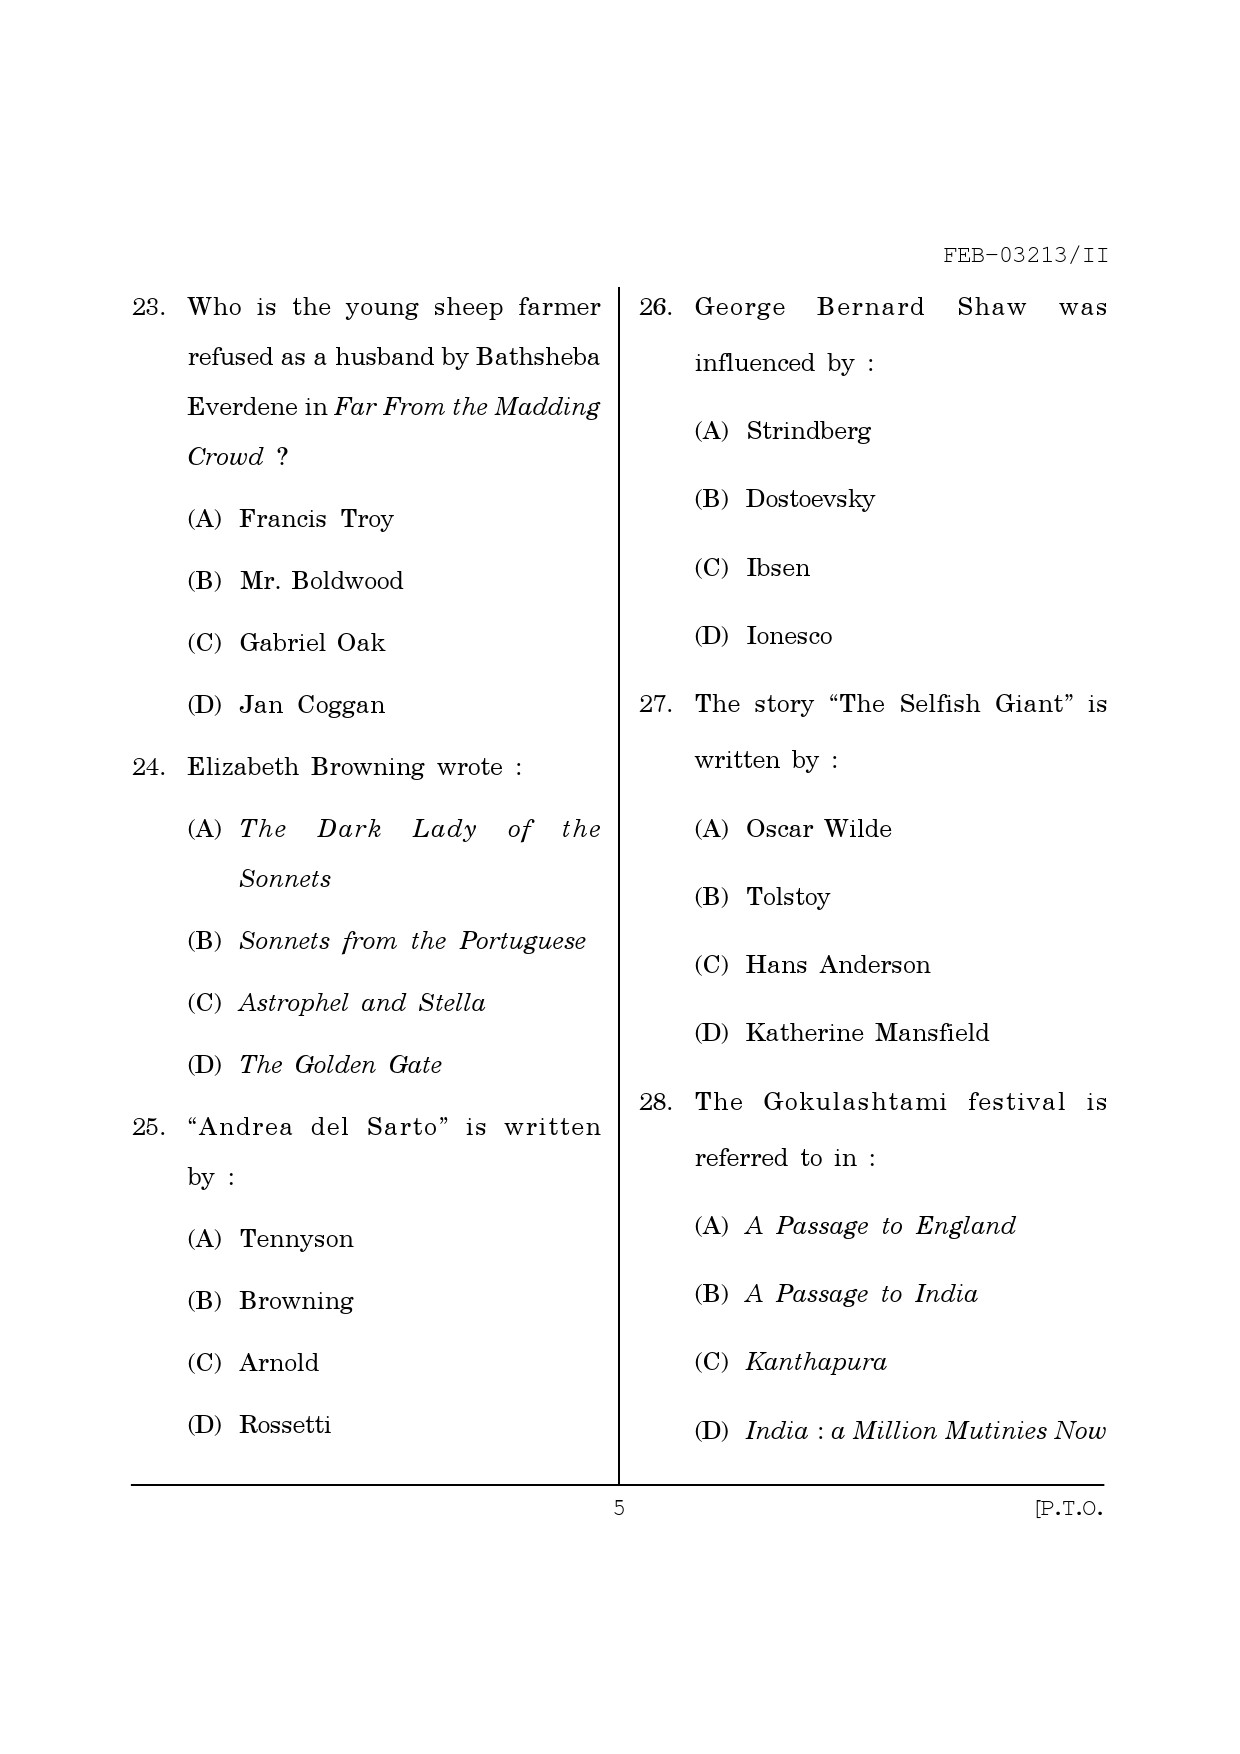 Maharashtra SET English Question Paper II February 2013 5